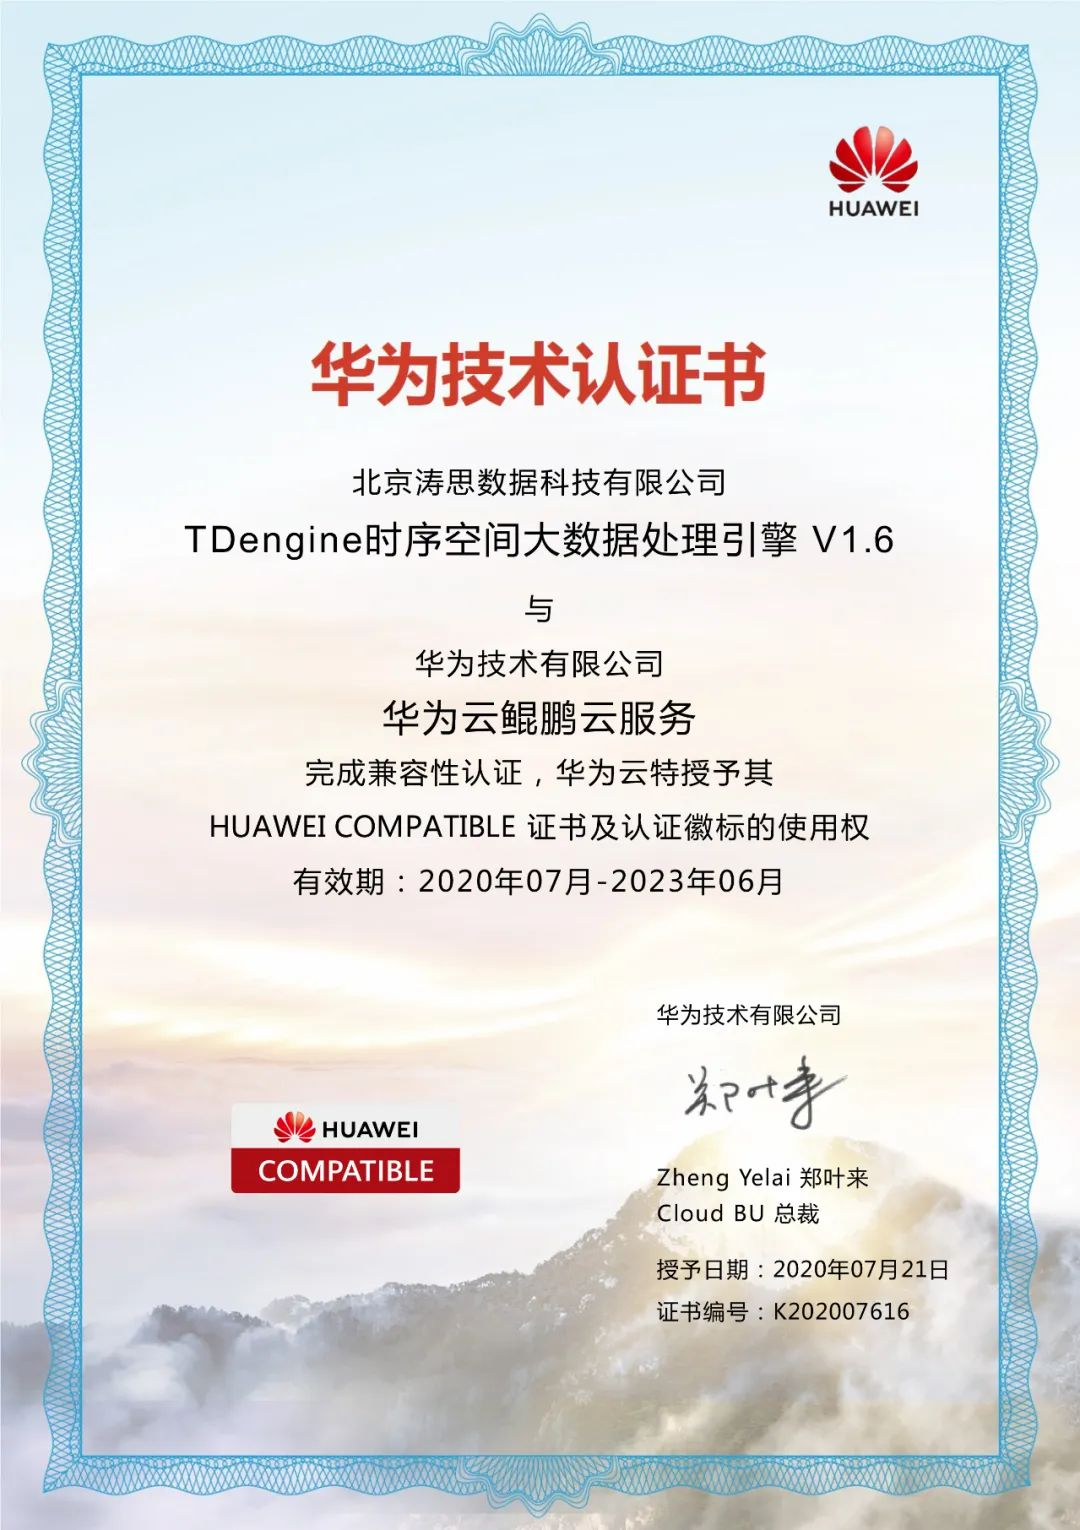 TDengine 完成与鲲鹏云服务兼容性认证，获得华为技术认证证书